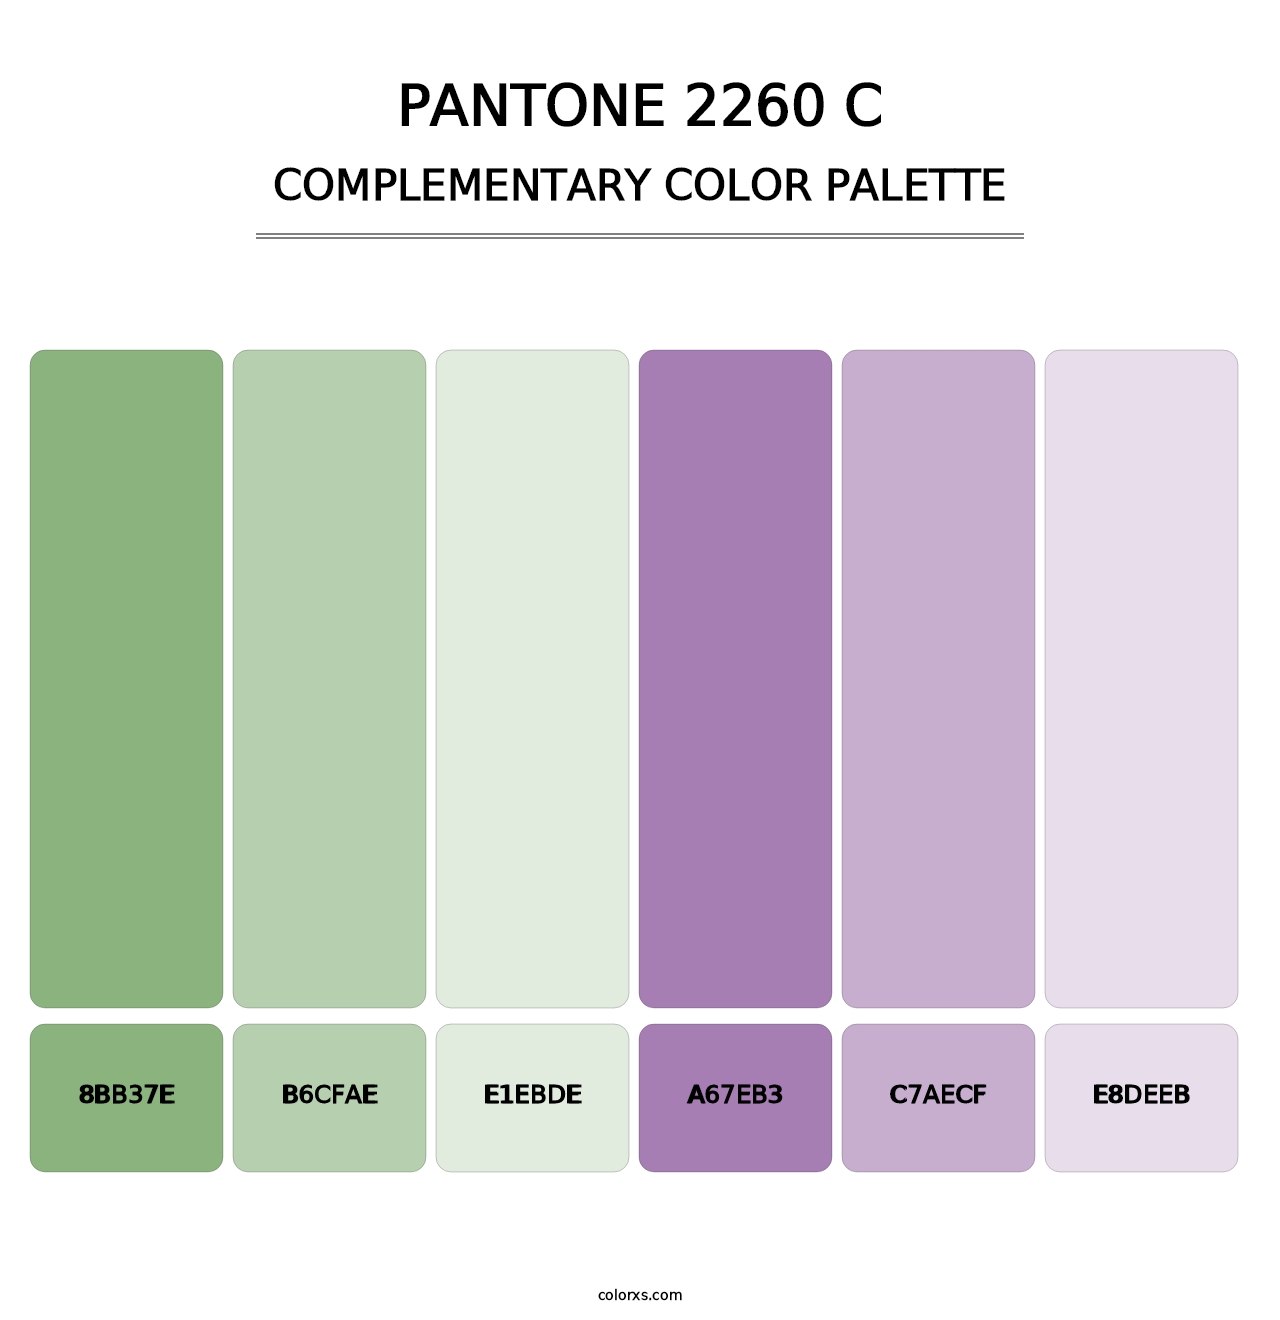 PANTONE 2260 C - Complementary Color Palette